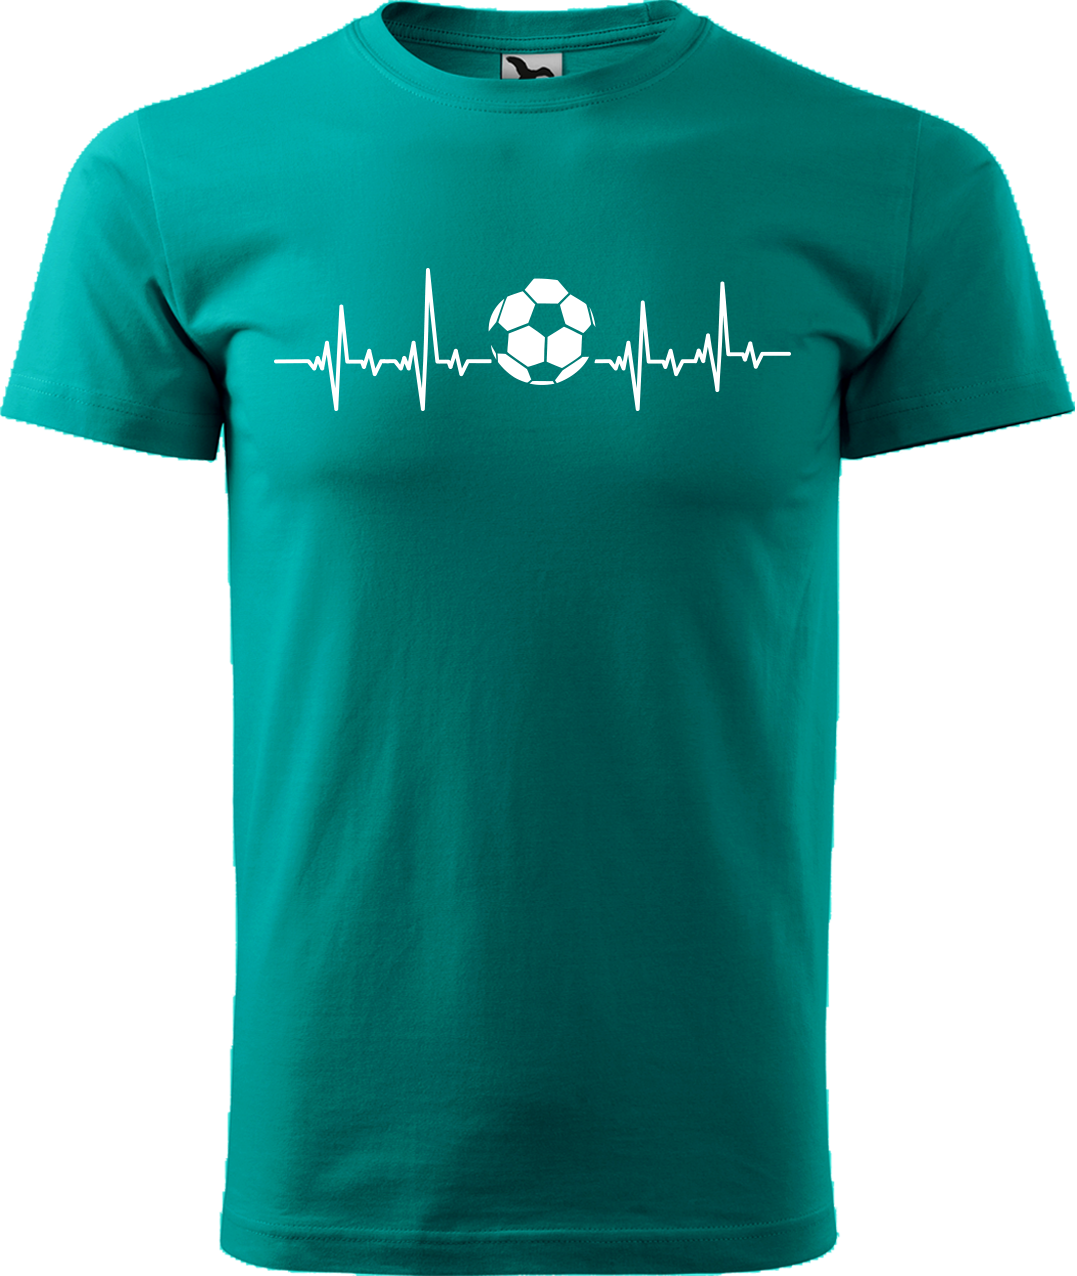 Tričko pro fotbalistu - Fotbalistův kardiogram Velikost: M, Barva: Emerald (19)